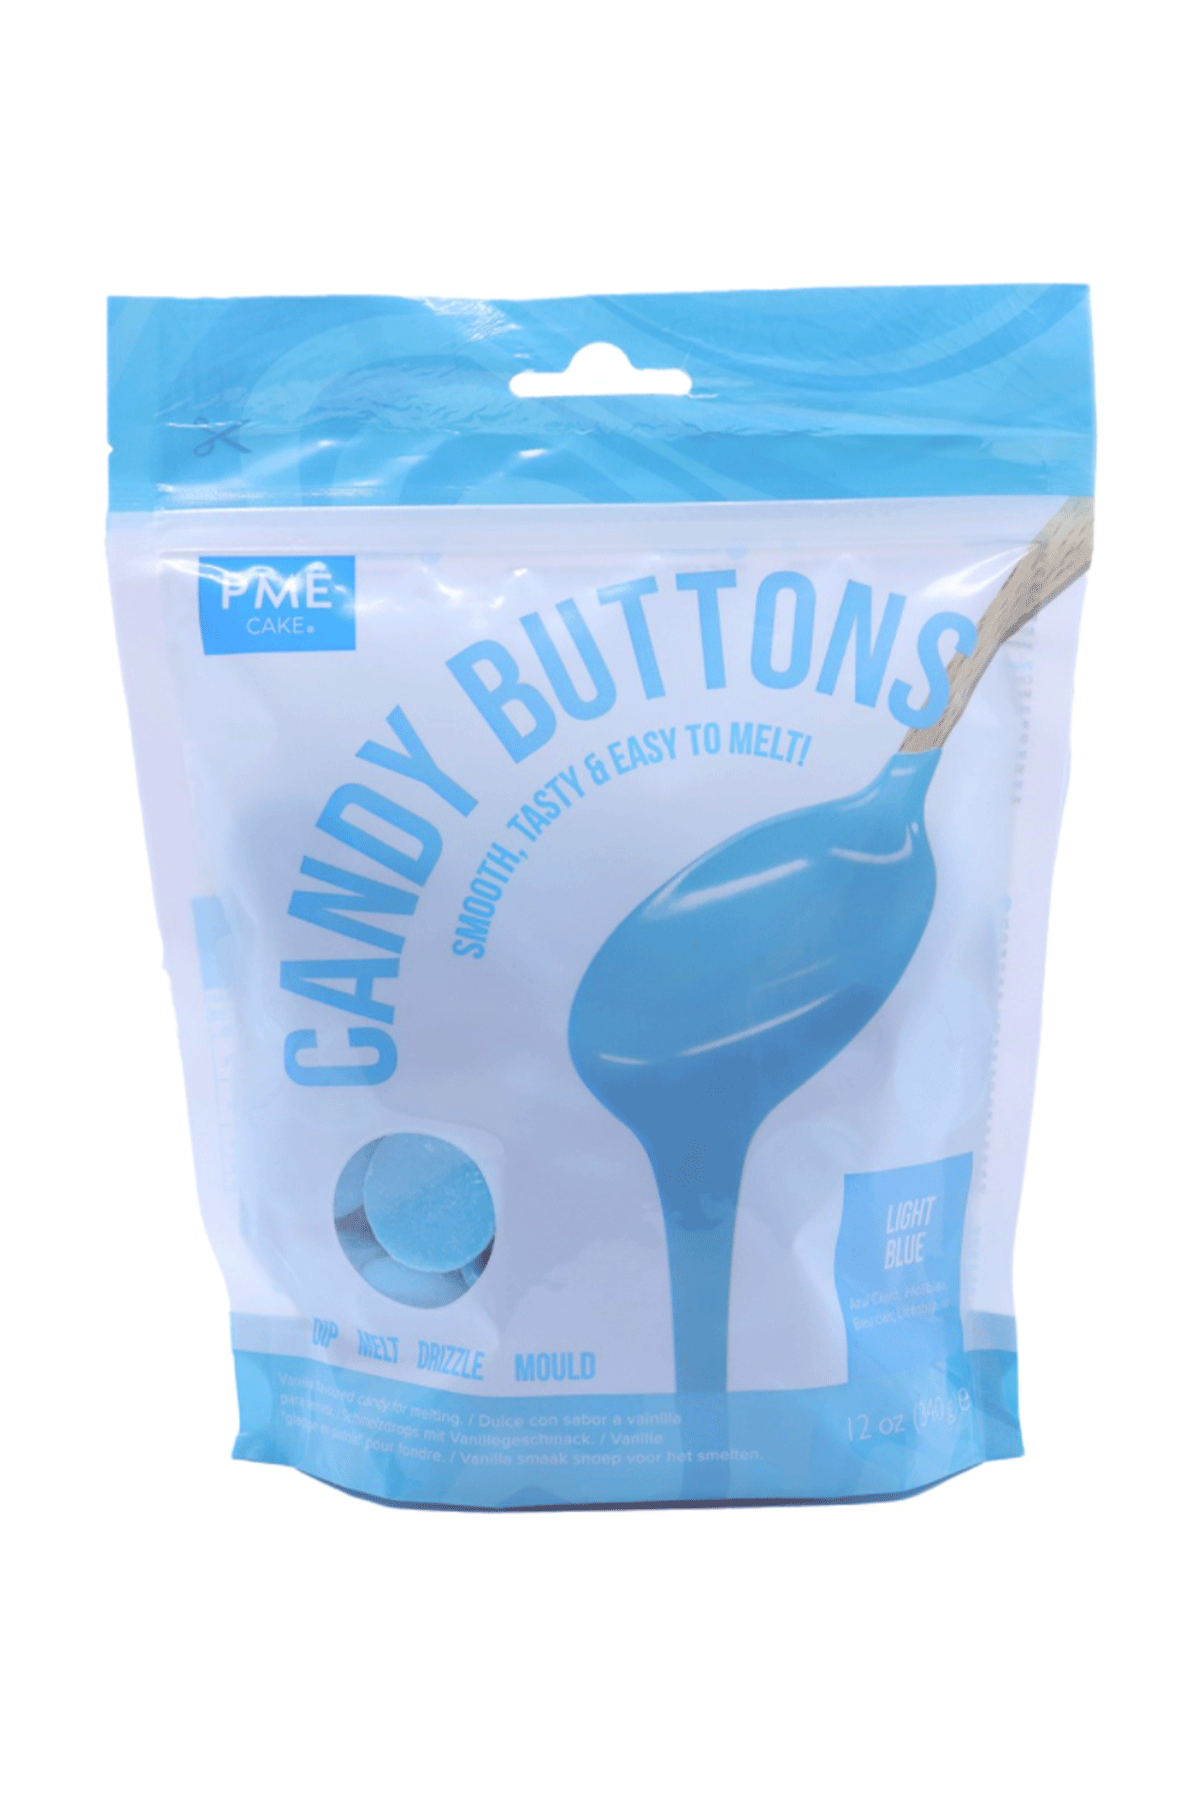 Candy Buttons - Light Blue (284g/10 oz) PME